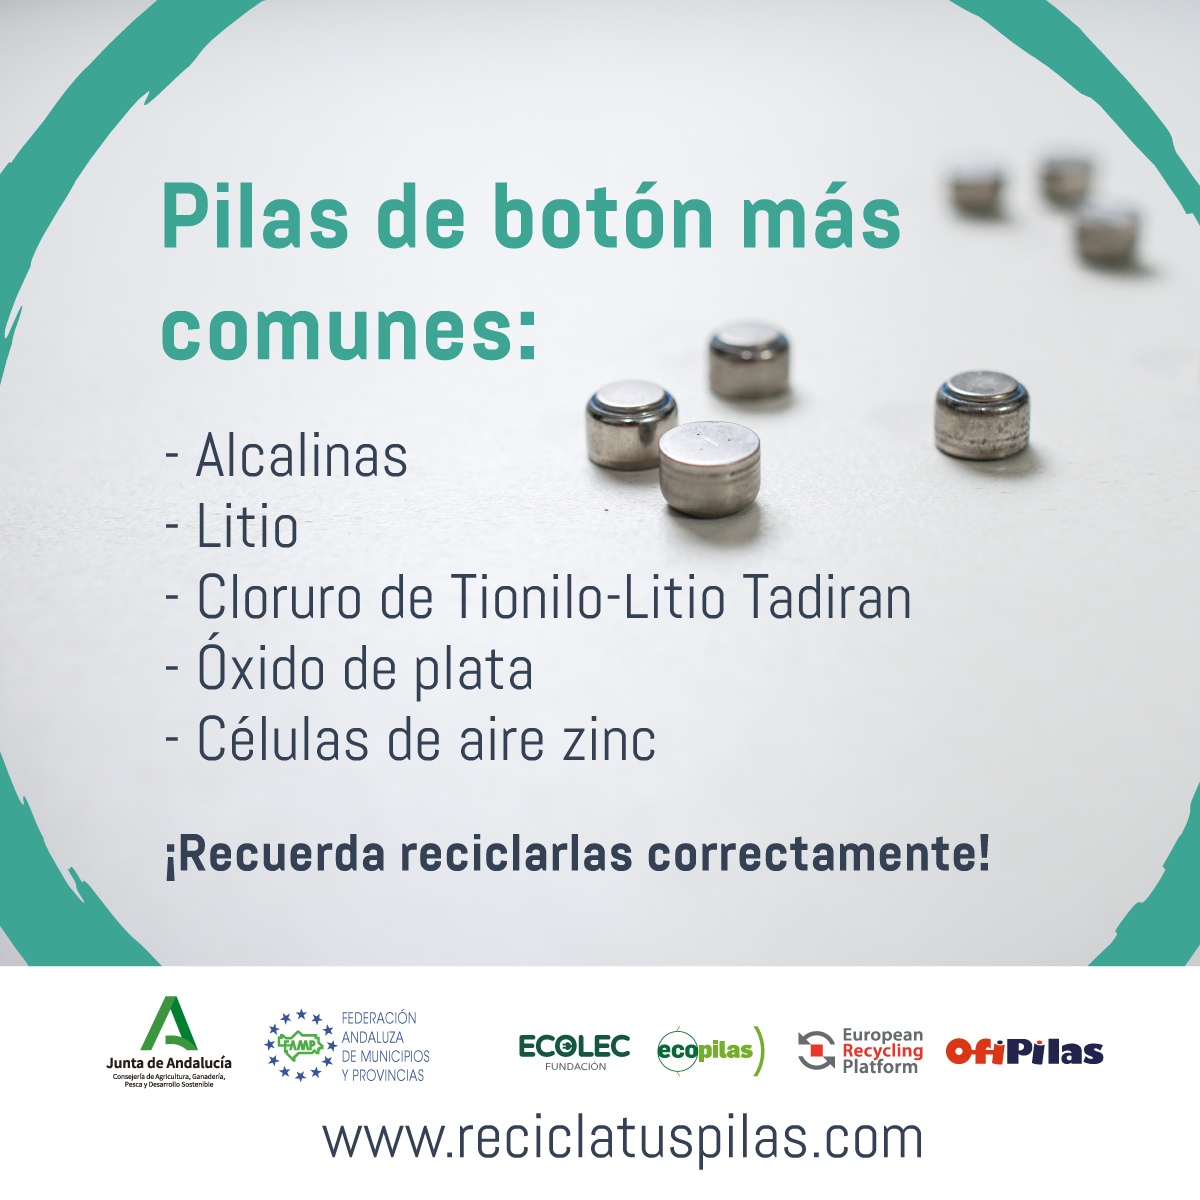 Referéndum Premonición pedestal Todo lo que debes saber acerca de las pilas de botón - Recicla tus Pilas  Andalucía